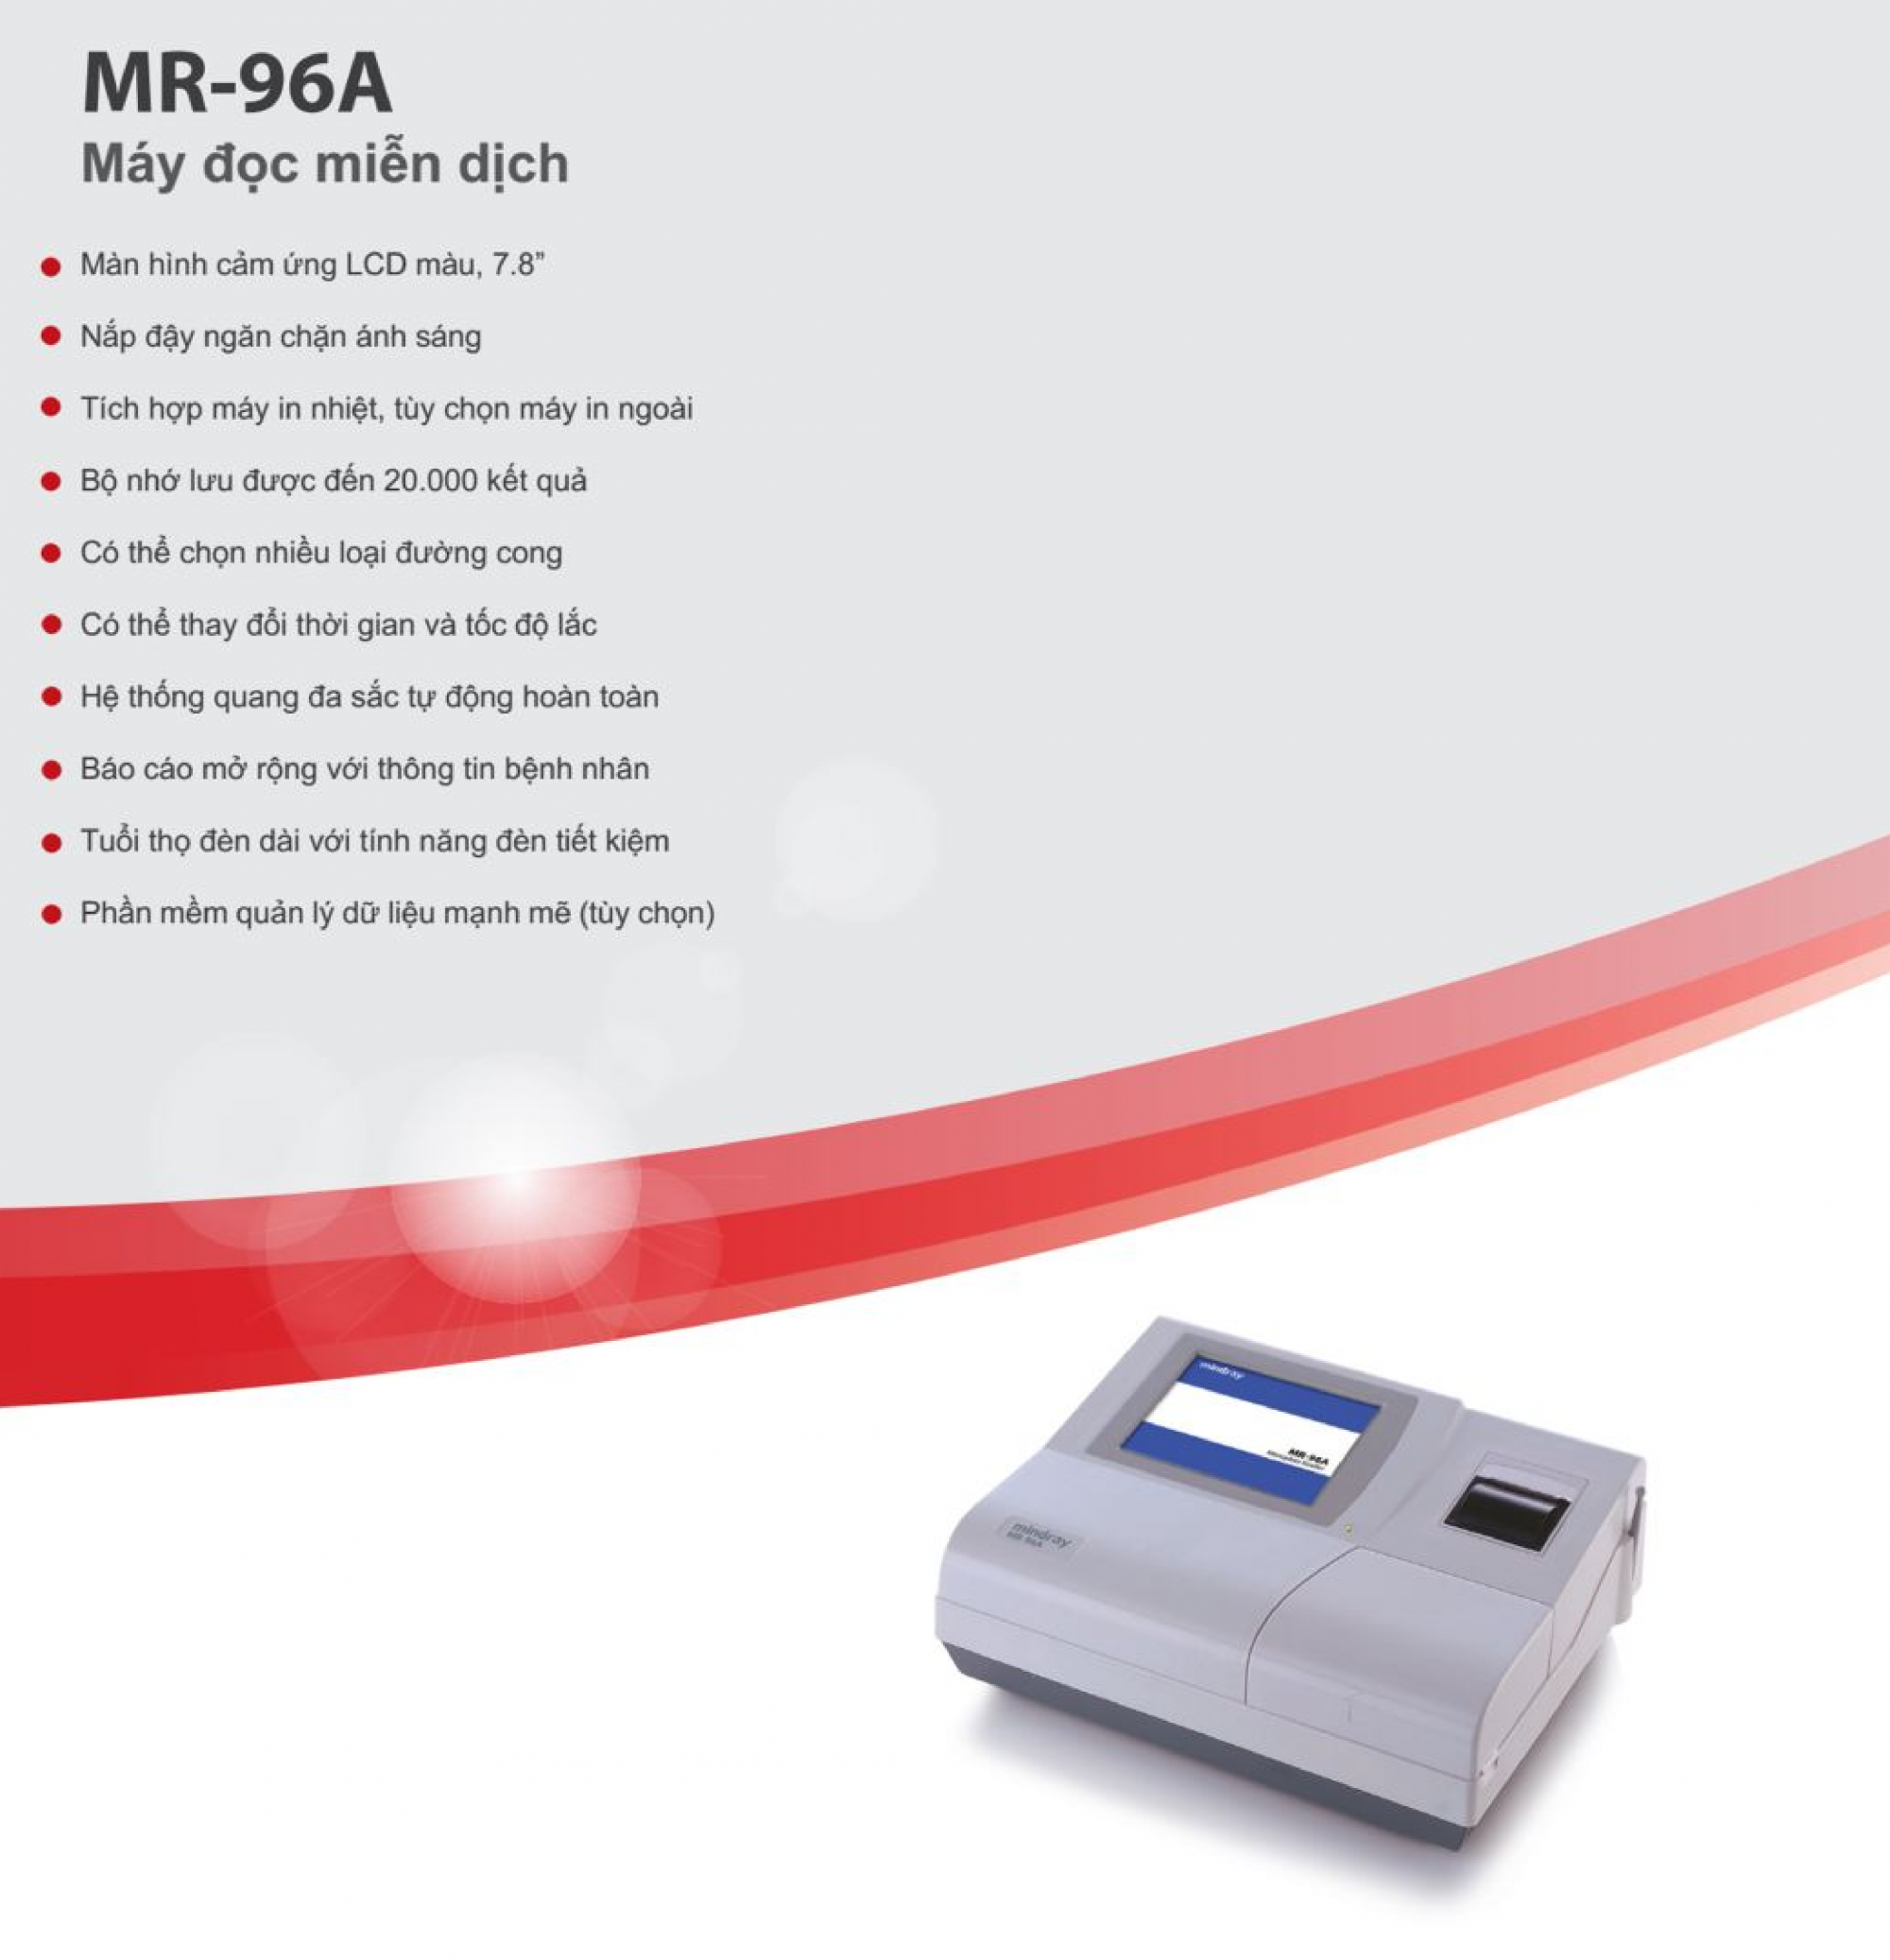 Catalogue-MR-96A_1